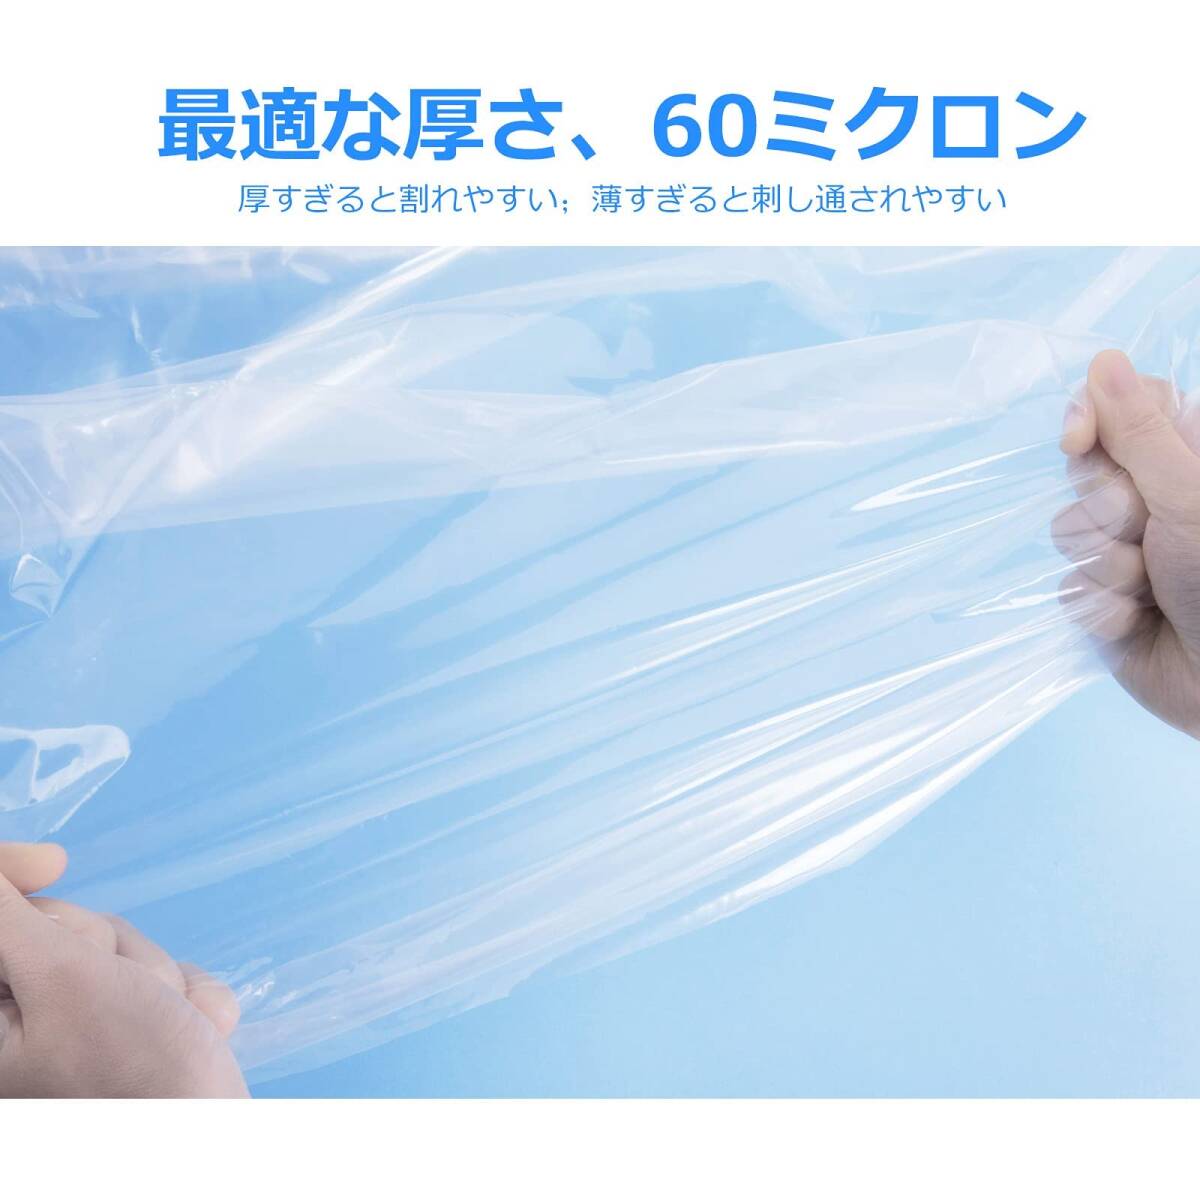  recommendation clothes vacuum bag 10 sheets insertion vacuum durability eminent compact design 